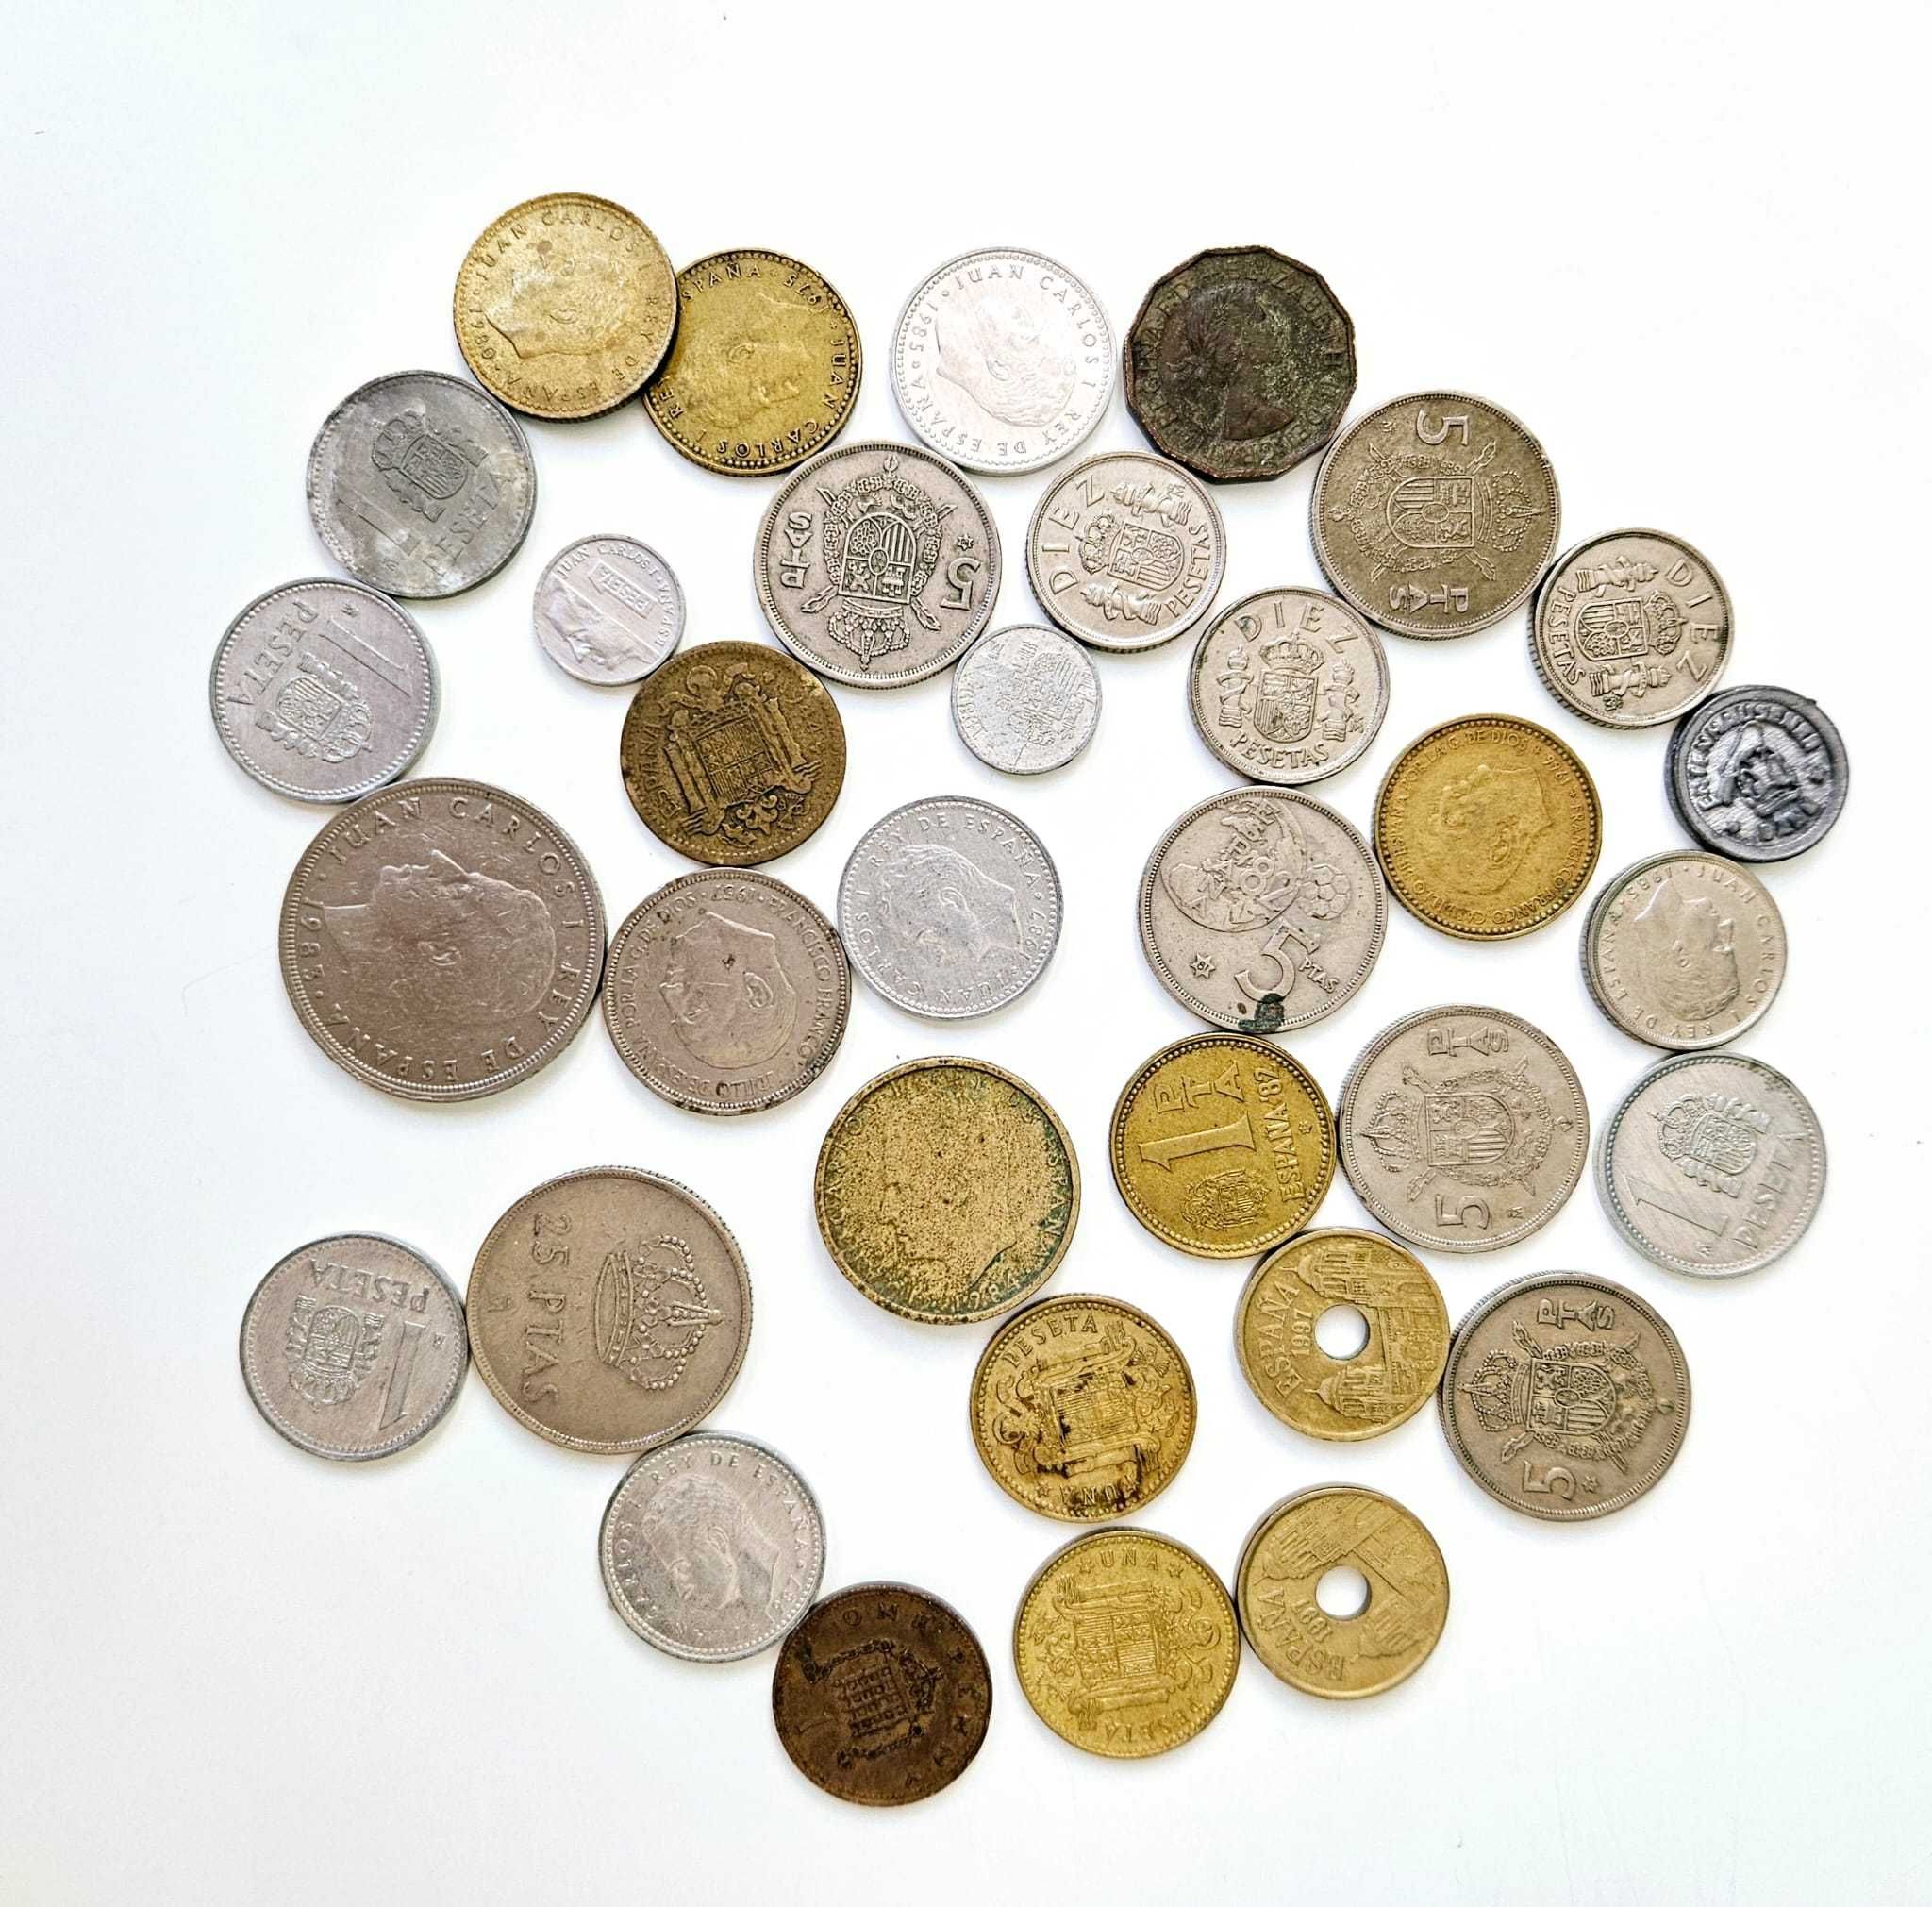 Vand monezi colectie - pesetas din Spania - incepand cu 1983